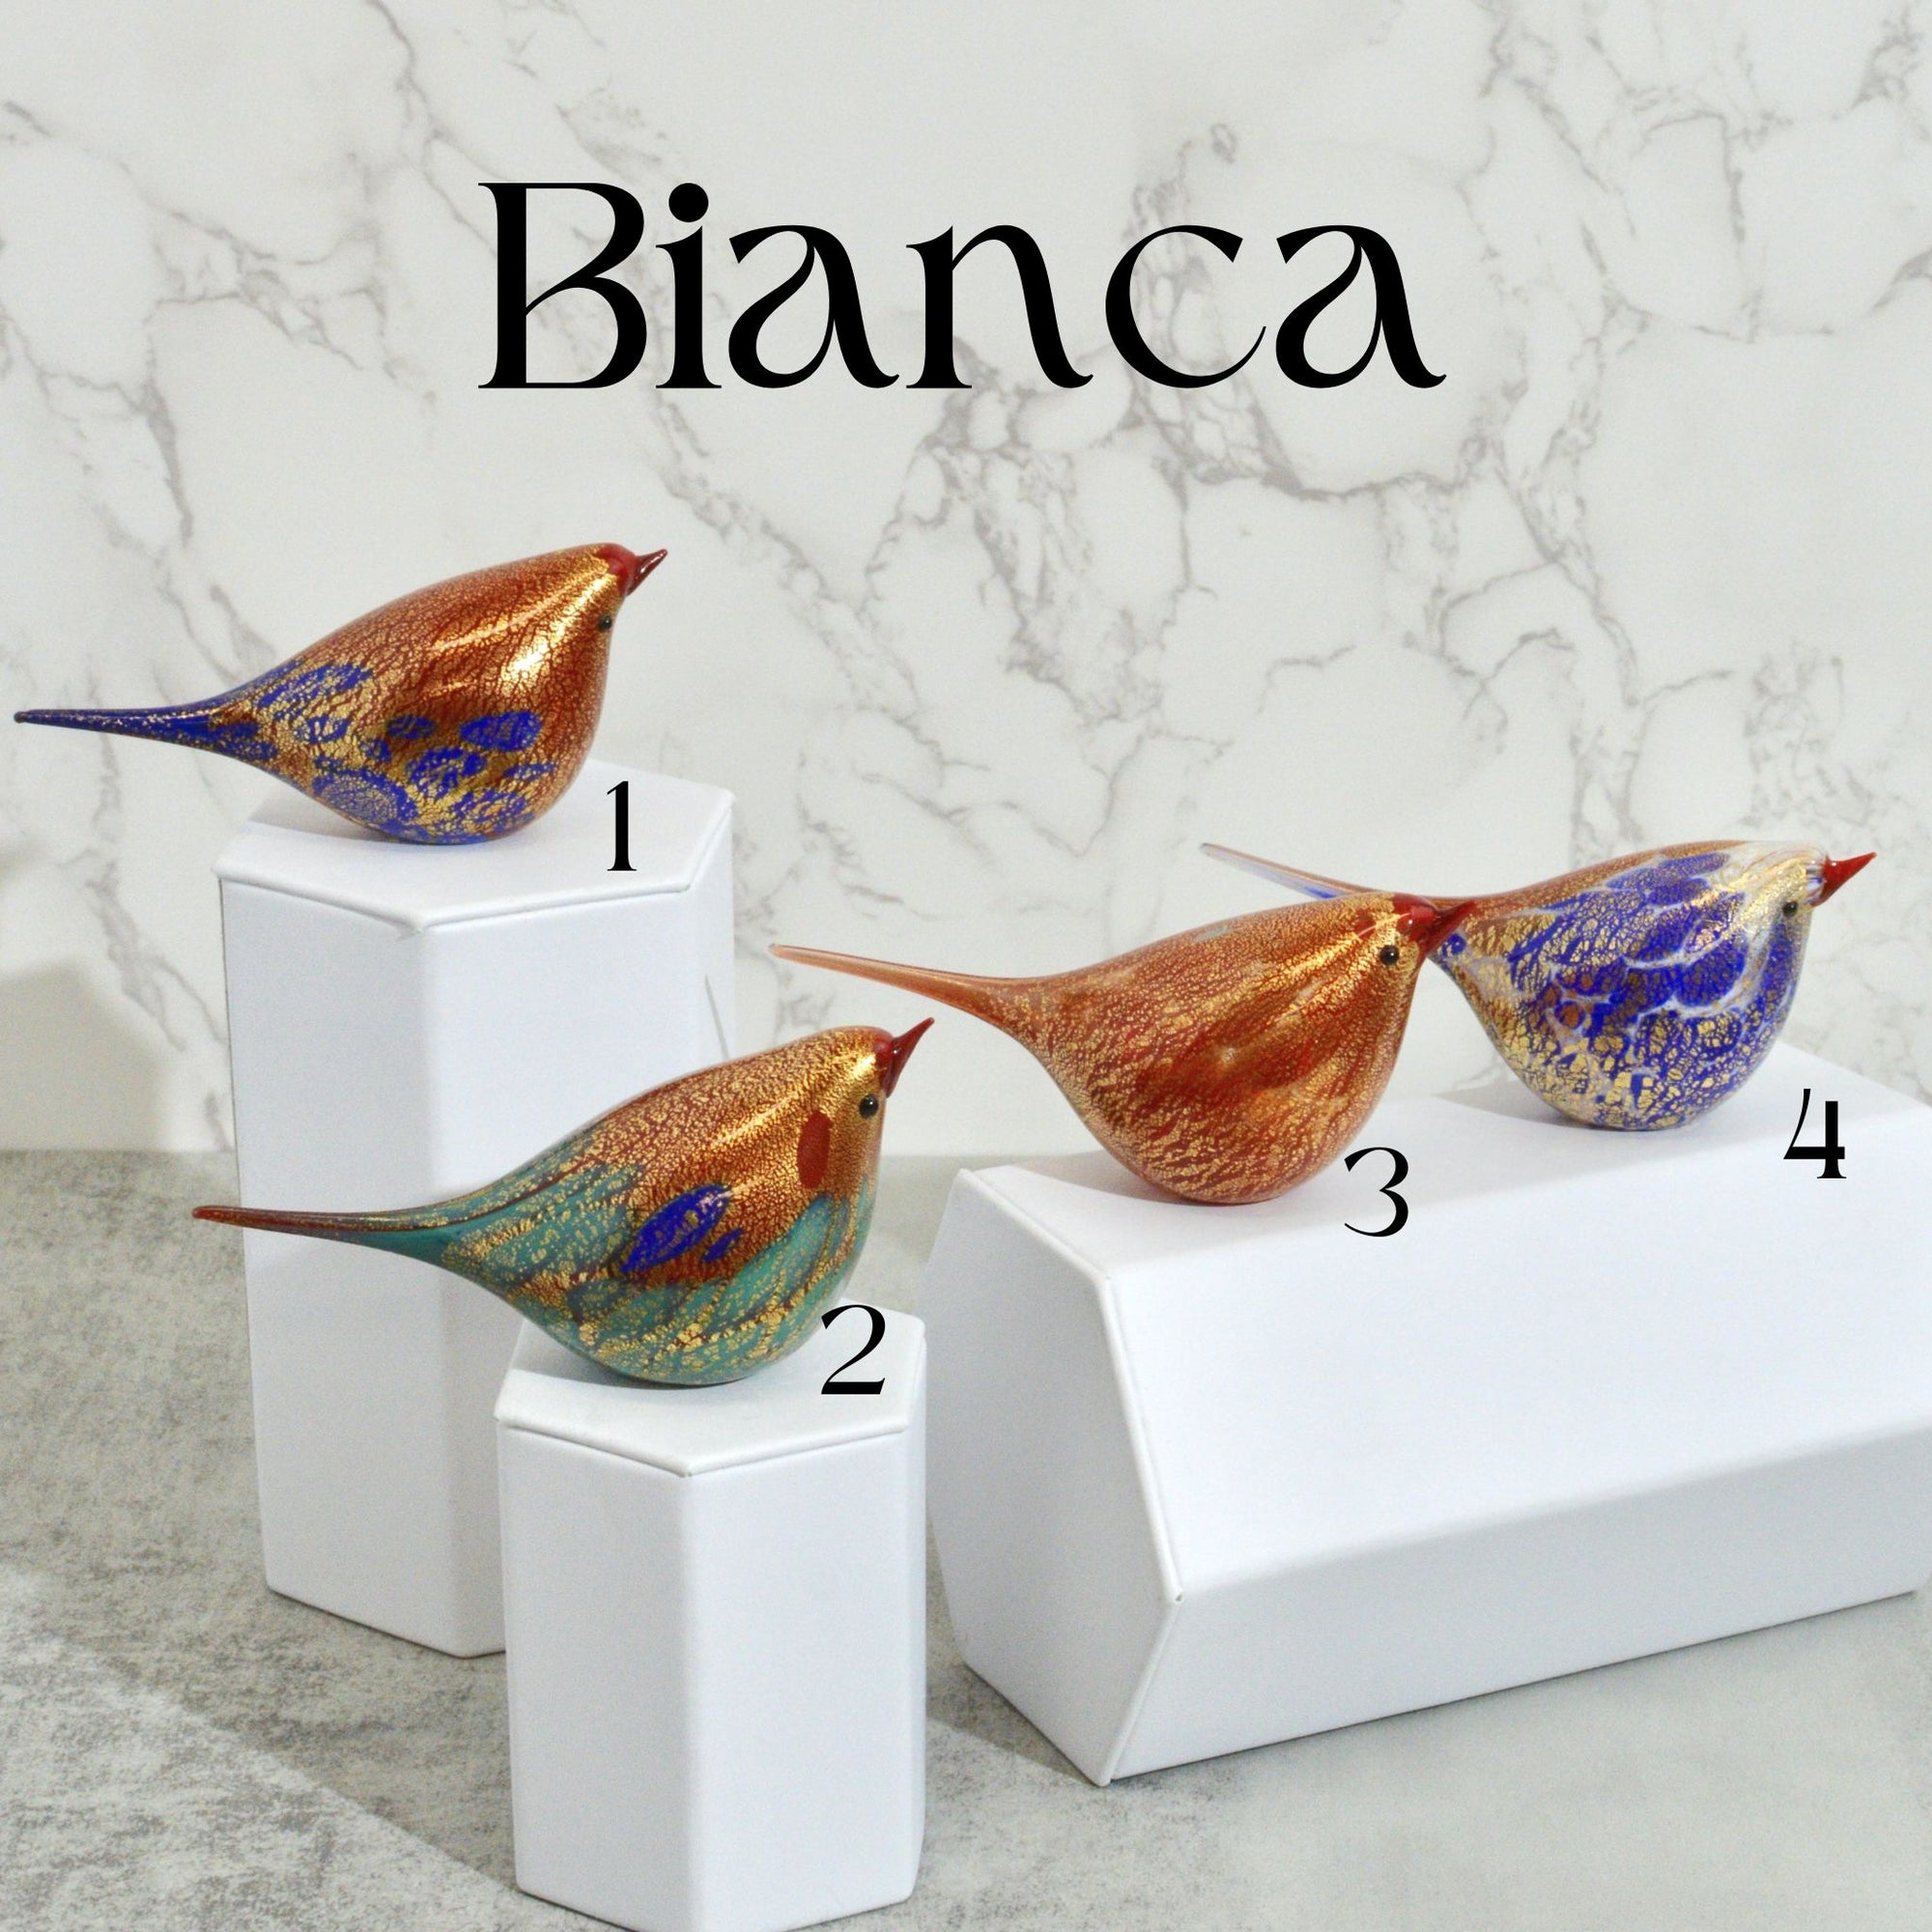 Murano Glass Chirpie Bird - Bianca, Red, Teal/Blue, 24-karat gold - My Italian Decor